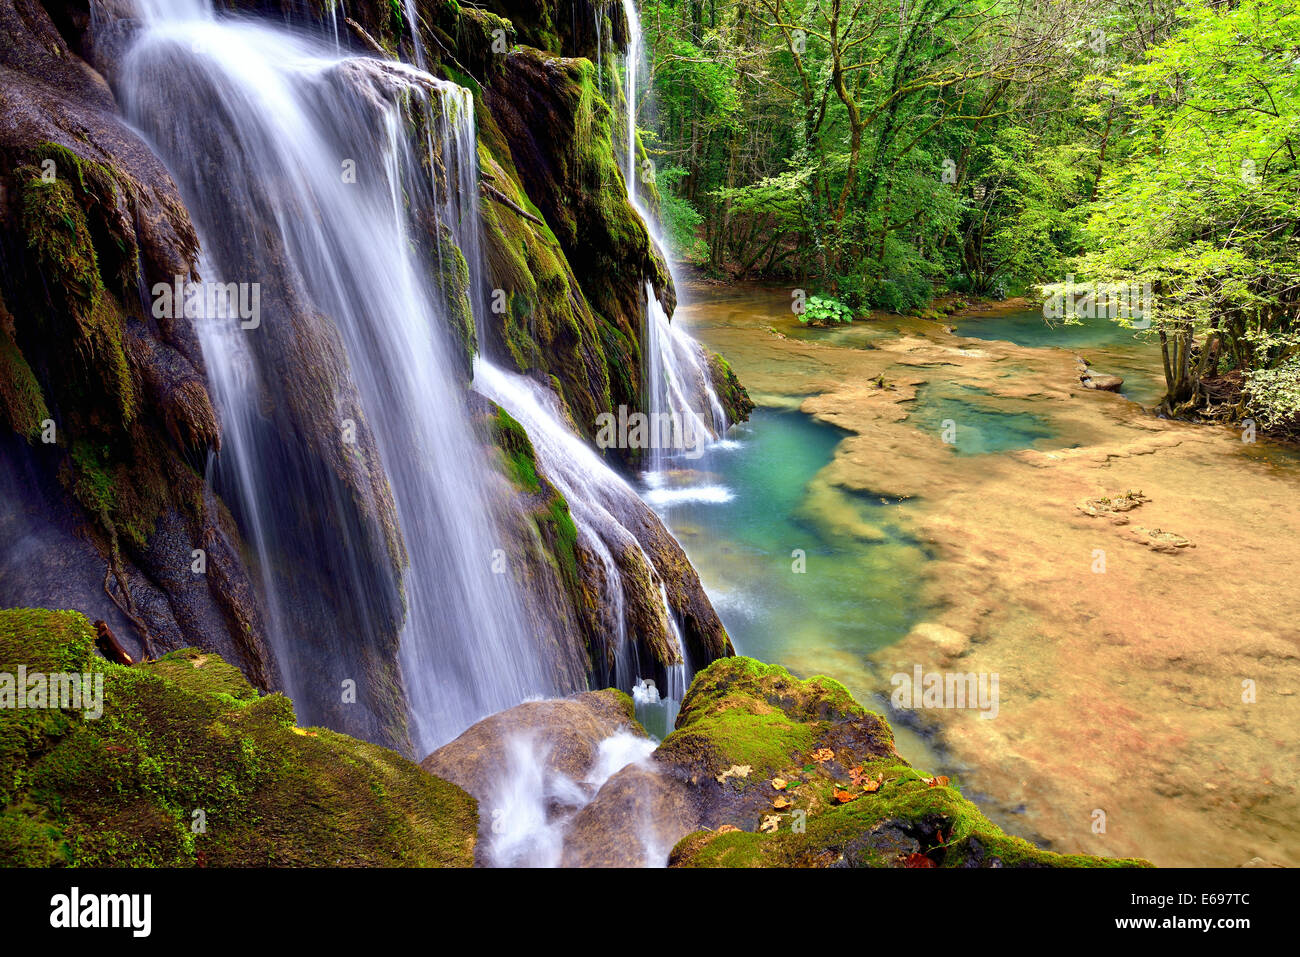 Waterfall, Cascade of Tufs in Les Planches pres près Arbois, Arbois, Franche-Comté, France Stock Photo